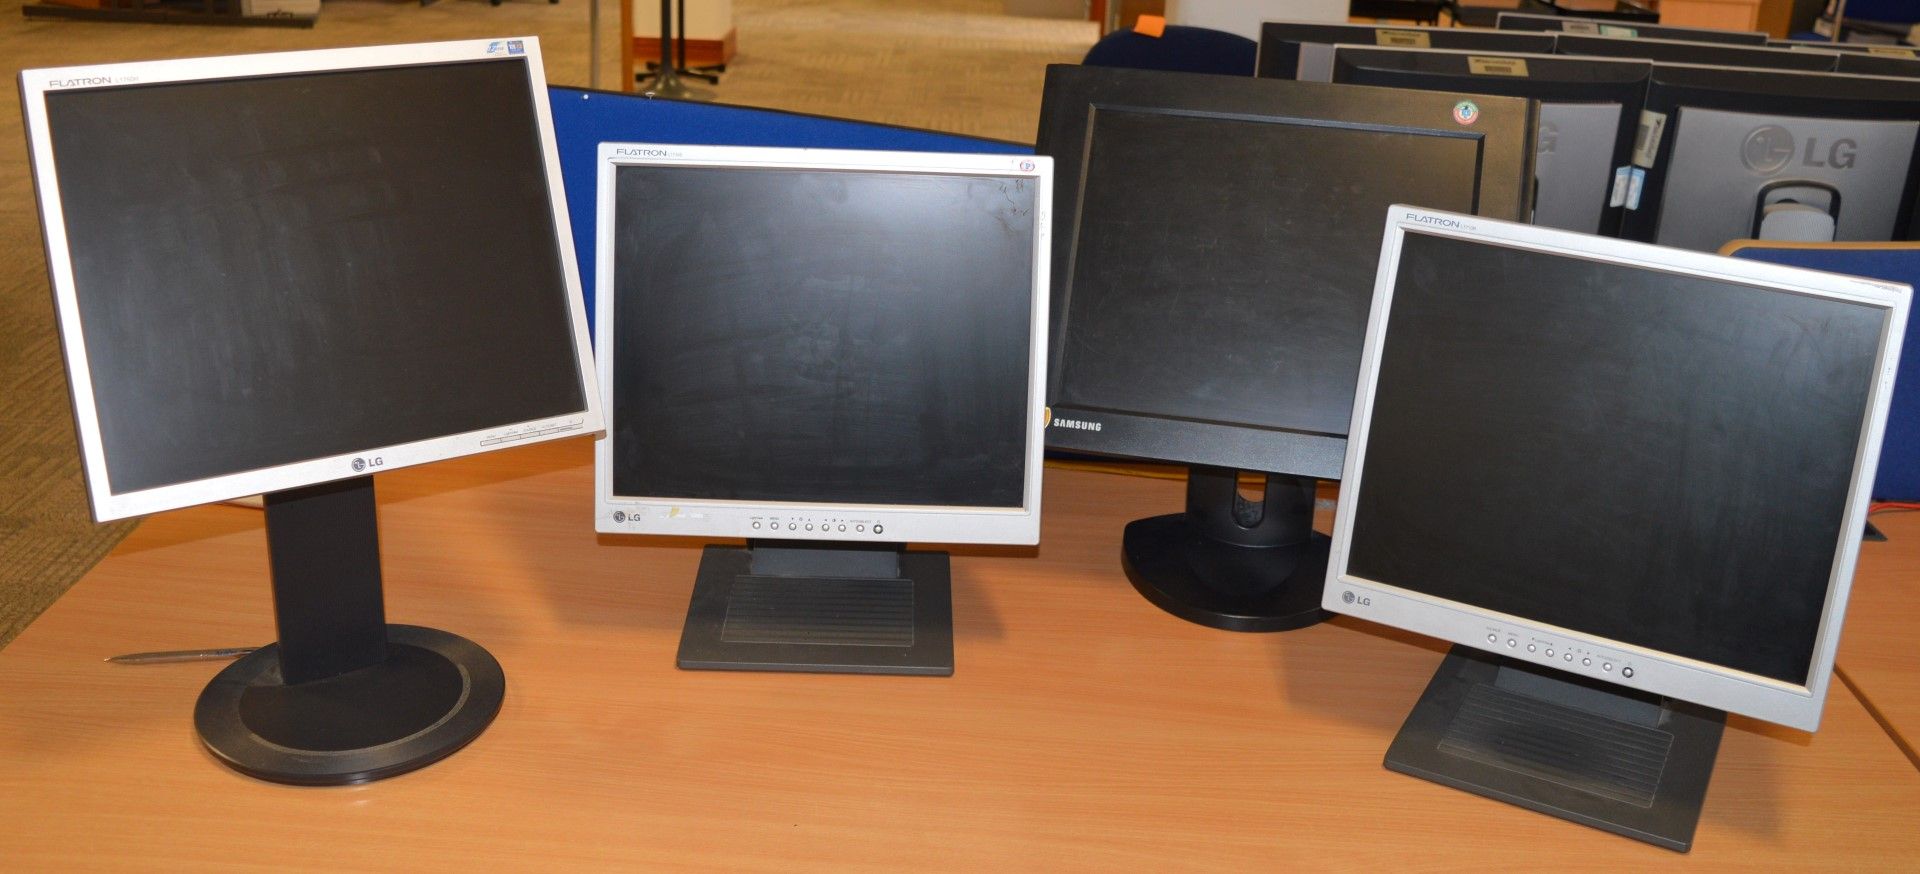 4 x Flat Screen TFT Computer Monitors - LG and Samsung Branded - Models Include L1710B, L1710s,